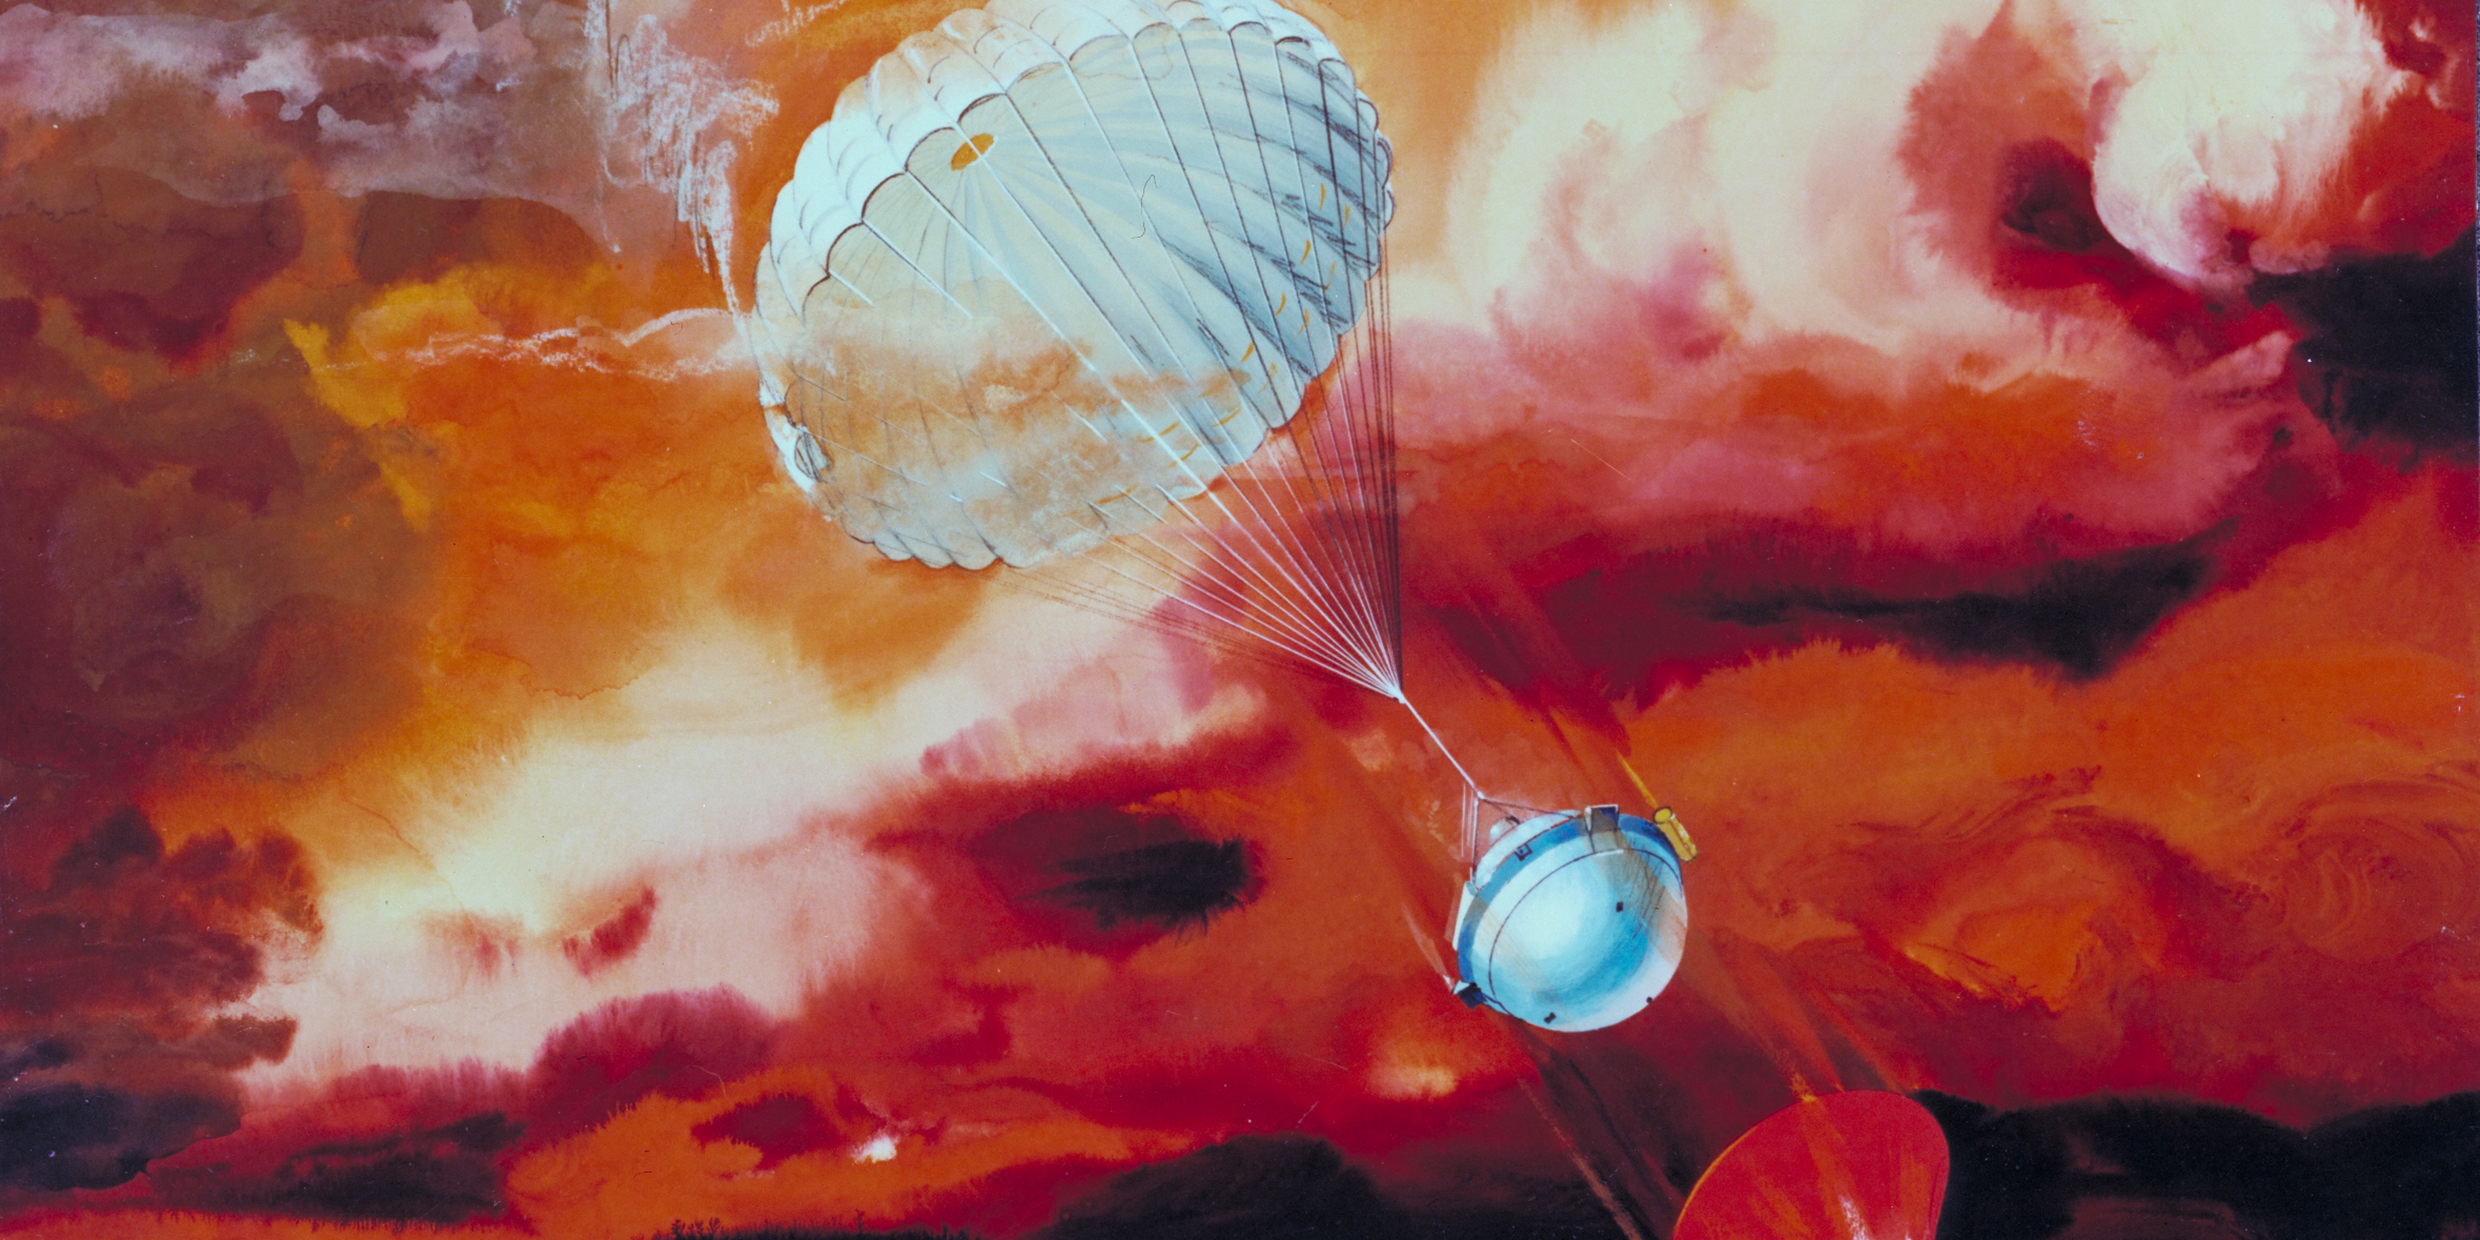 Artist's impression of a probe parachuting into Jupiter's atmosphere